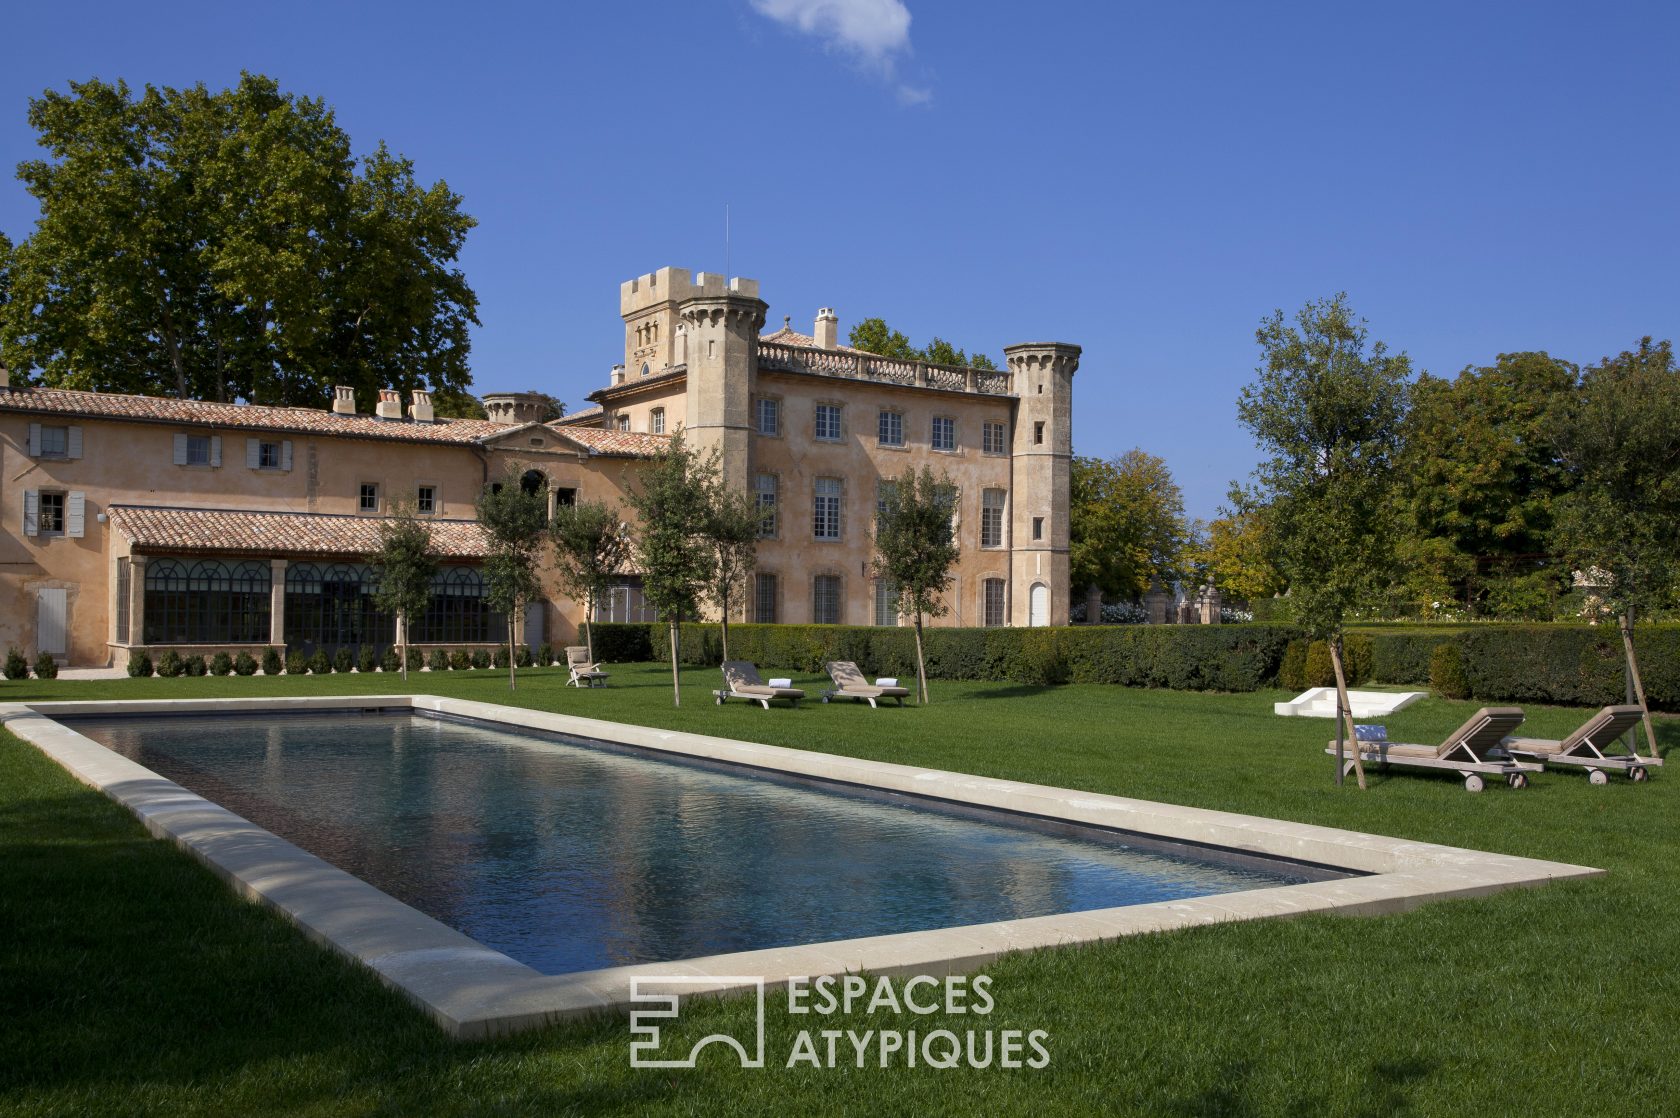 Estate with Tuscan villas